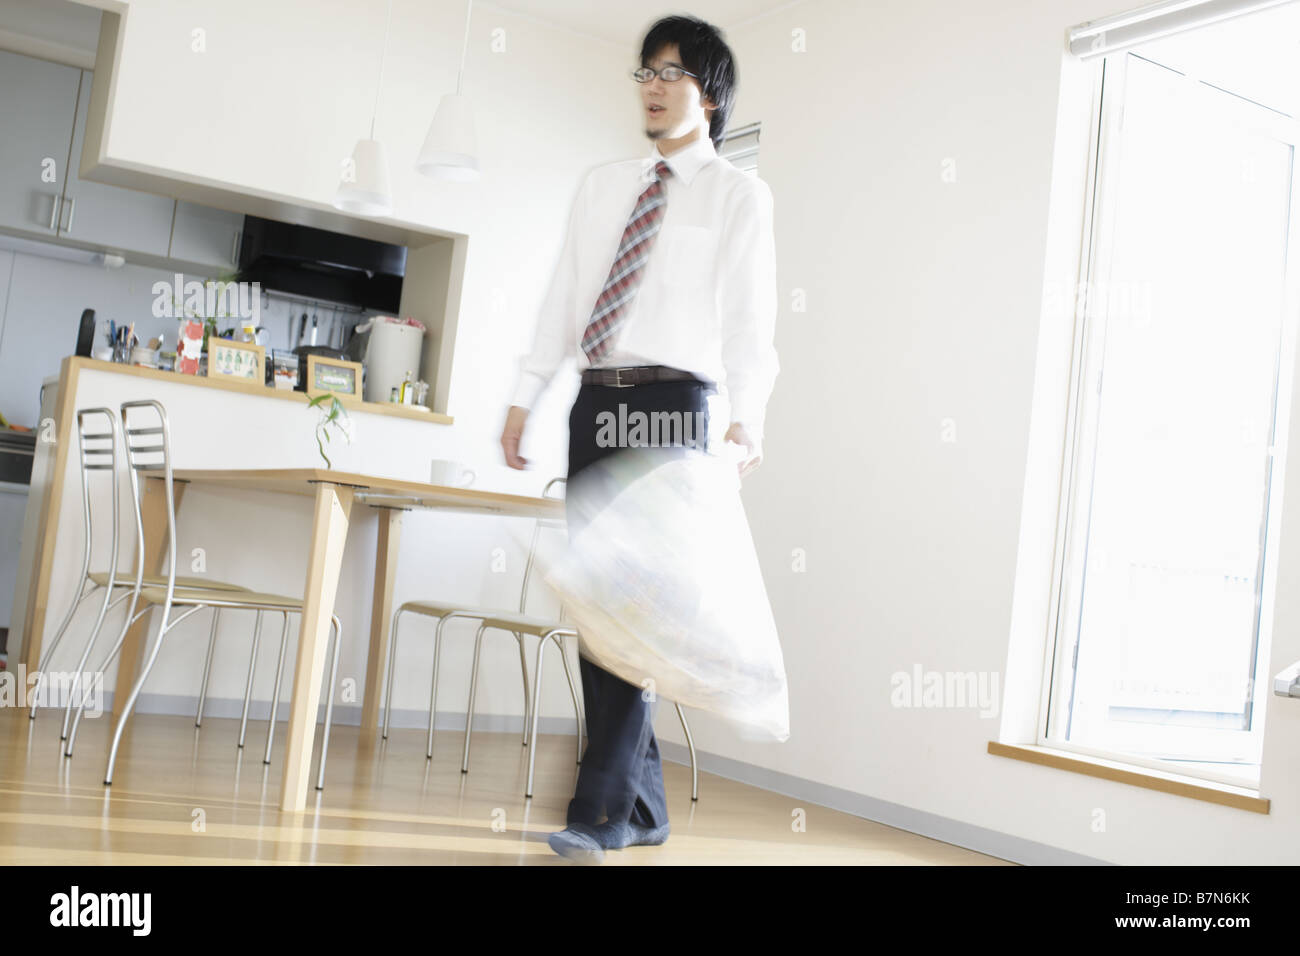 Businessman With Bin Bag Walking Stock Photo